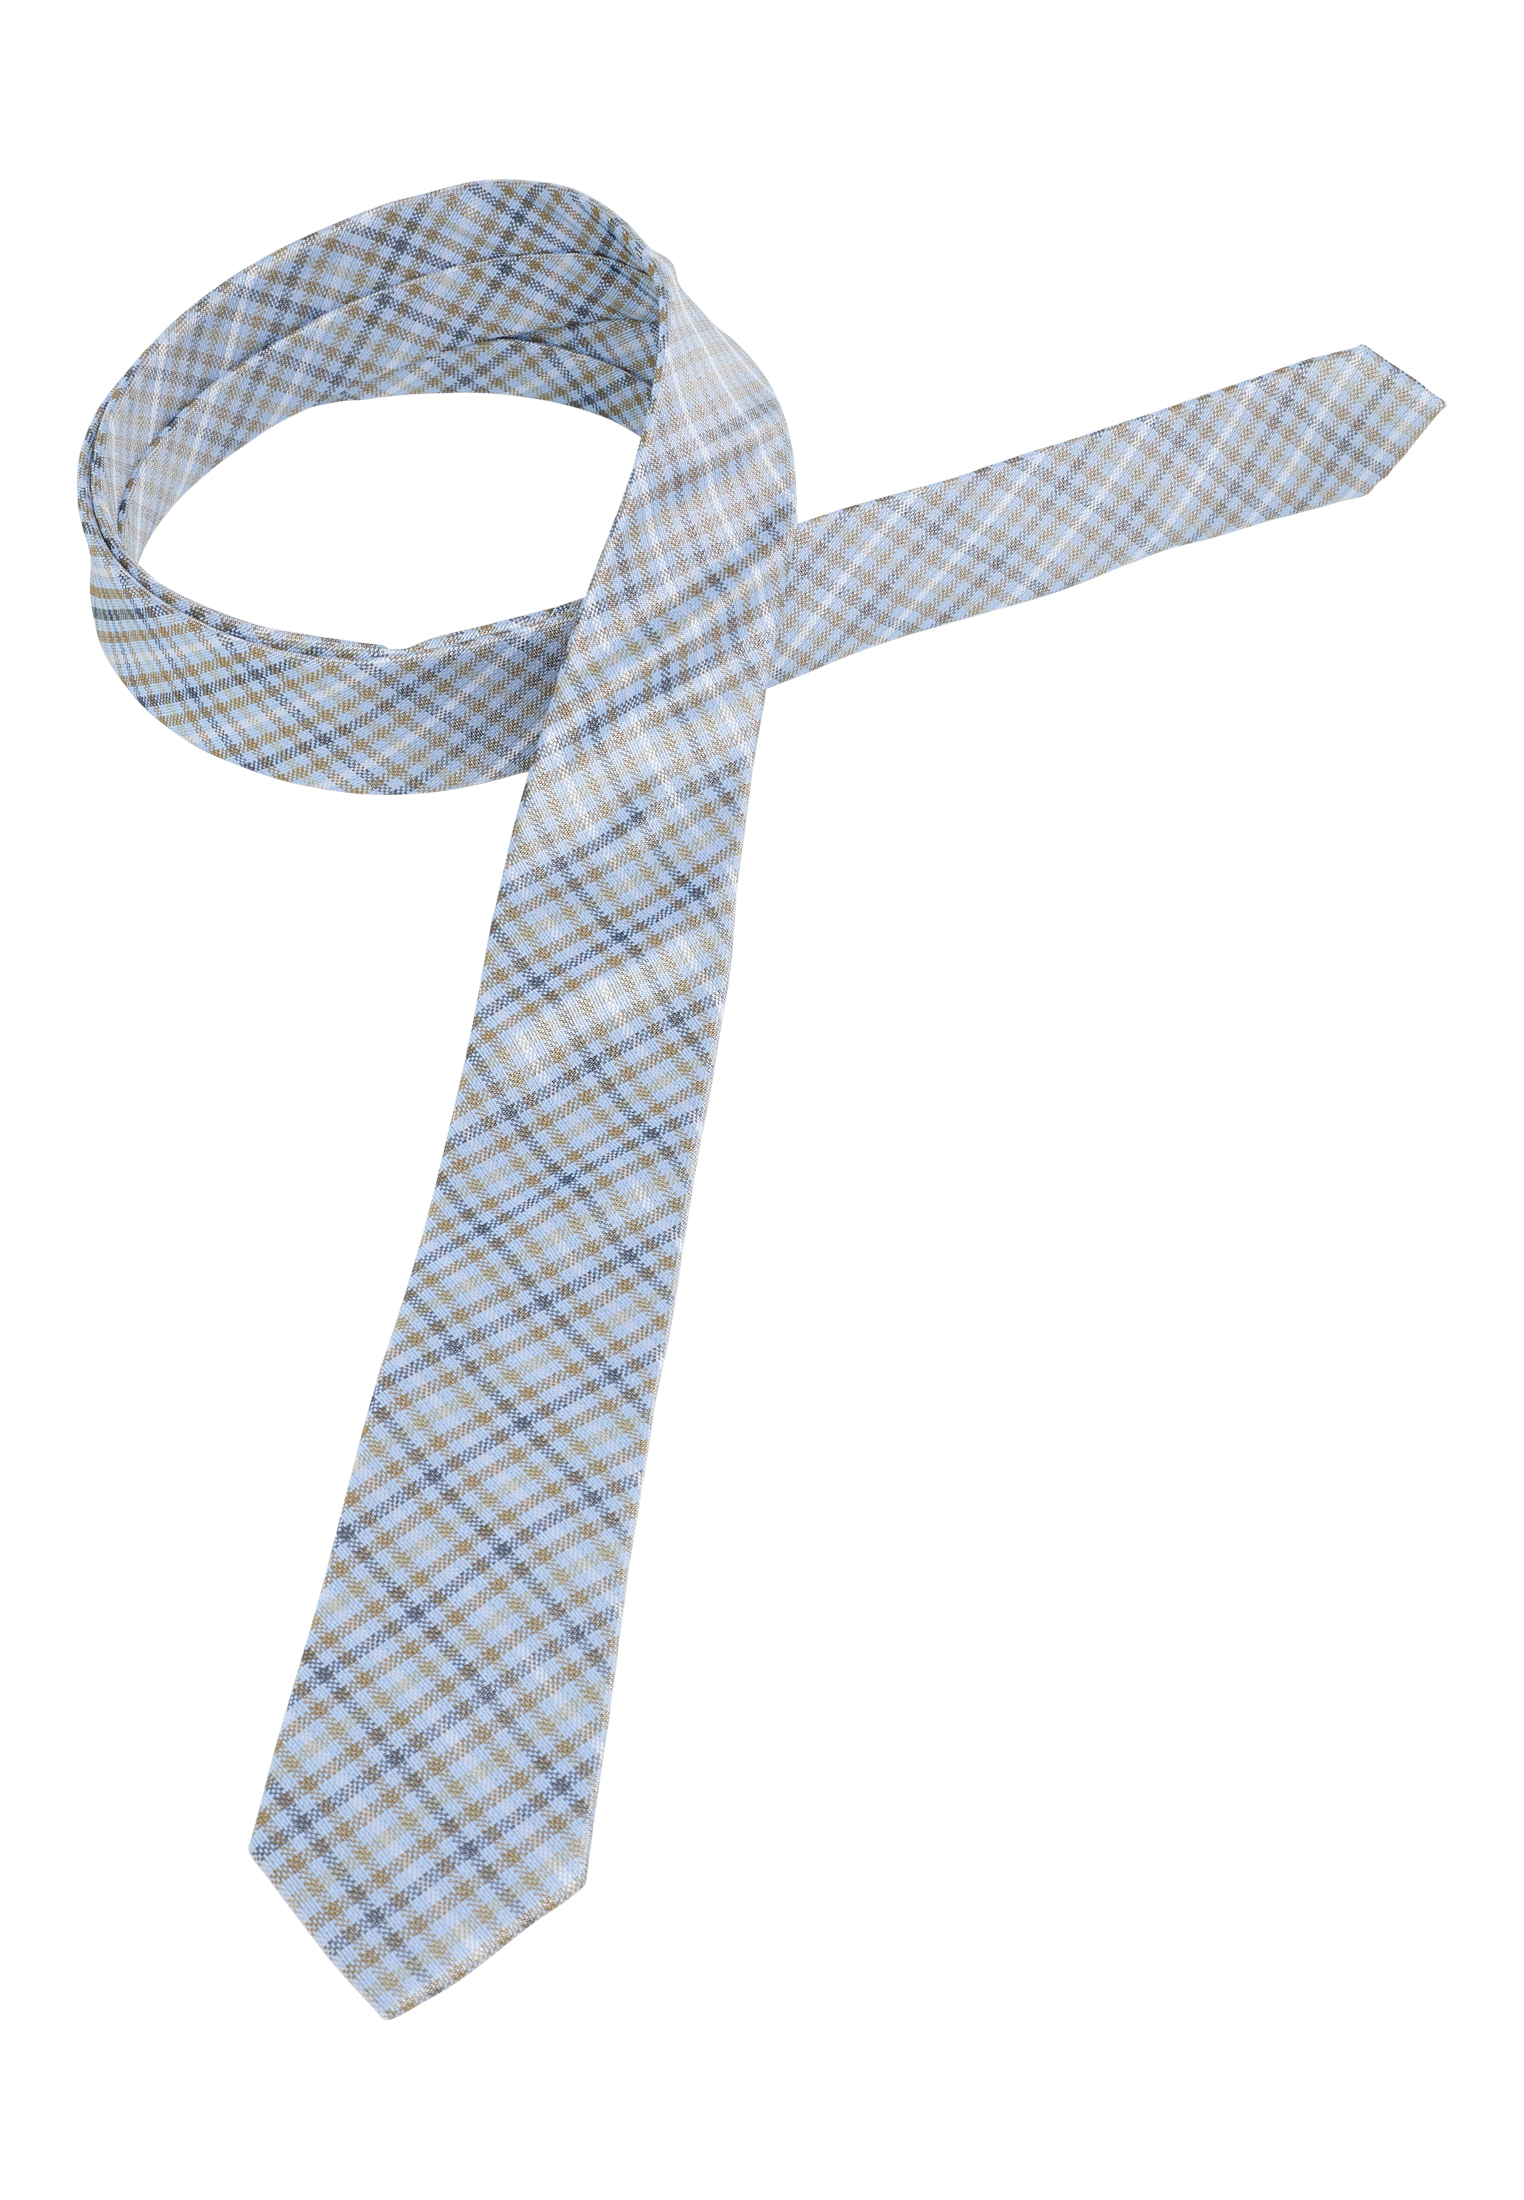 high-quality silk tie